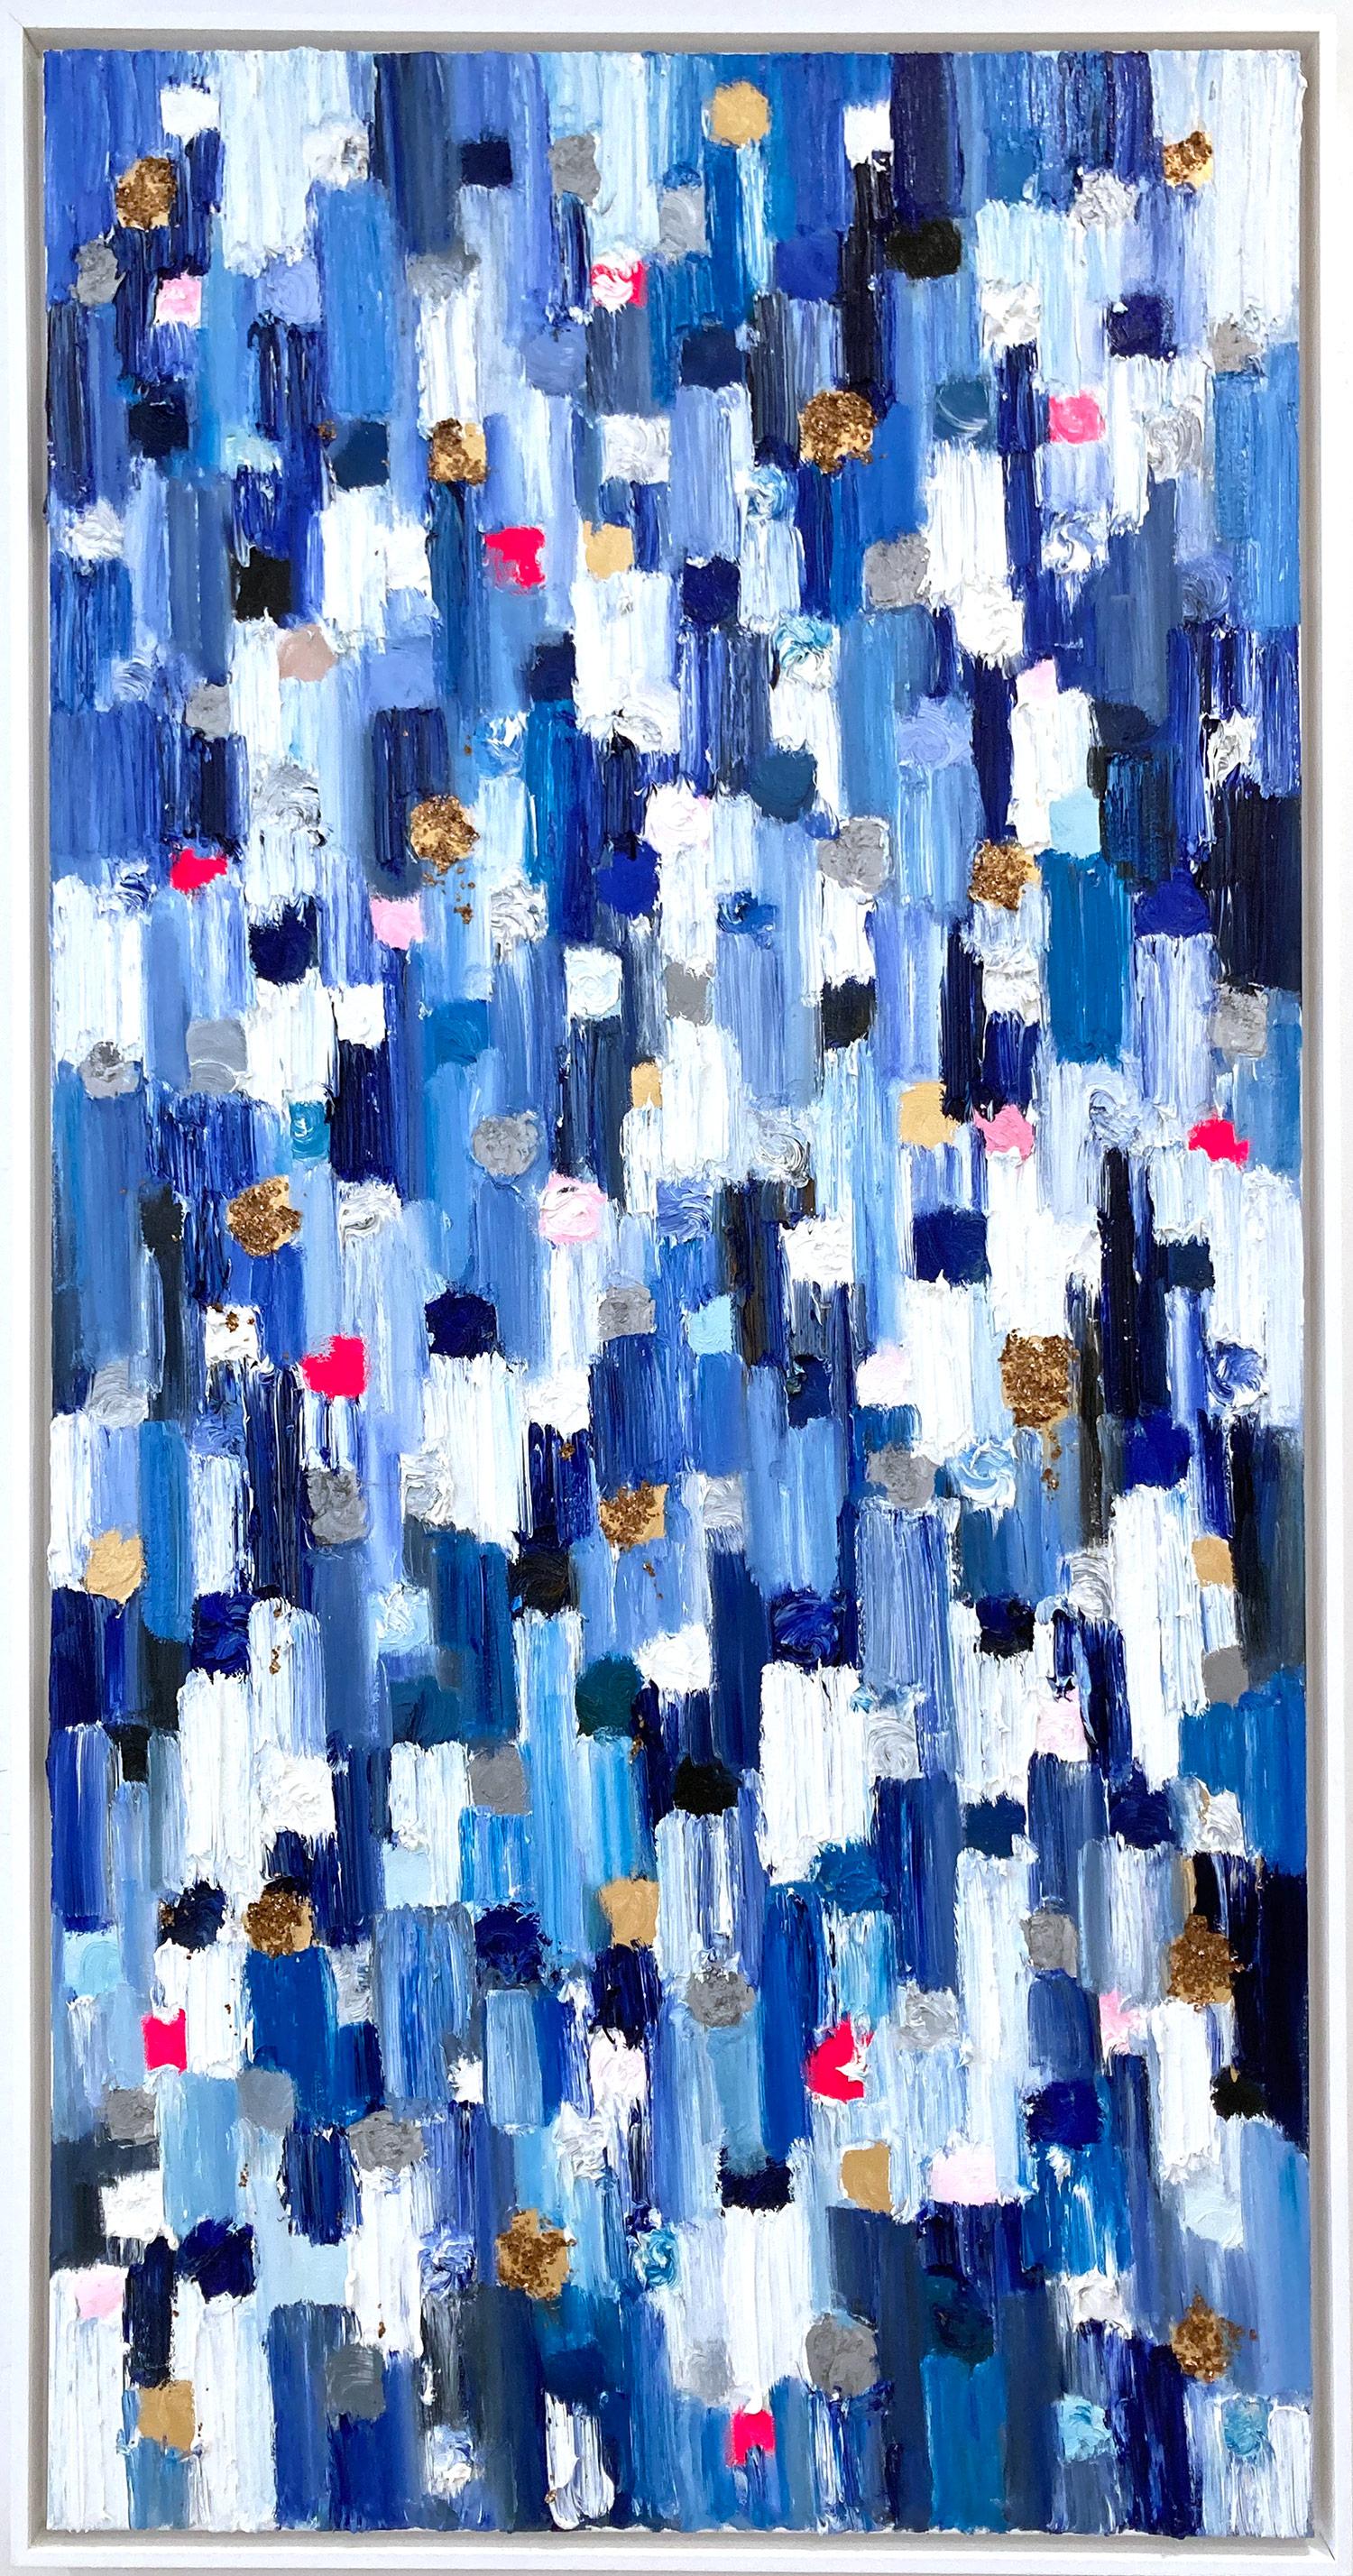 Abstract Painting Cindy Shaoul - "Dripping Dots - Monaco Grand" Peinture à l'huile contemporaine multicolore sur toile